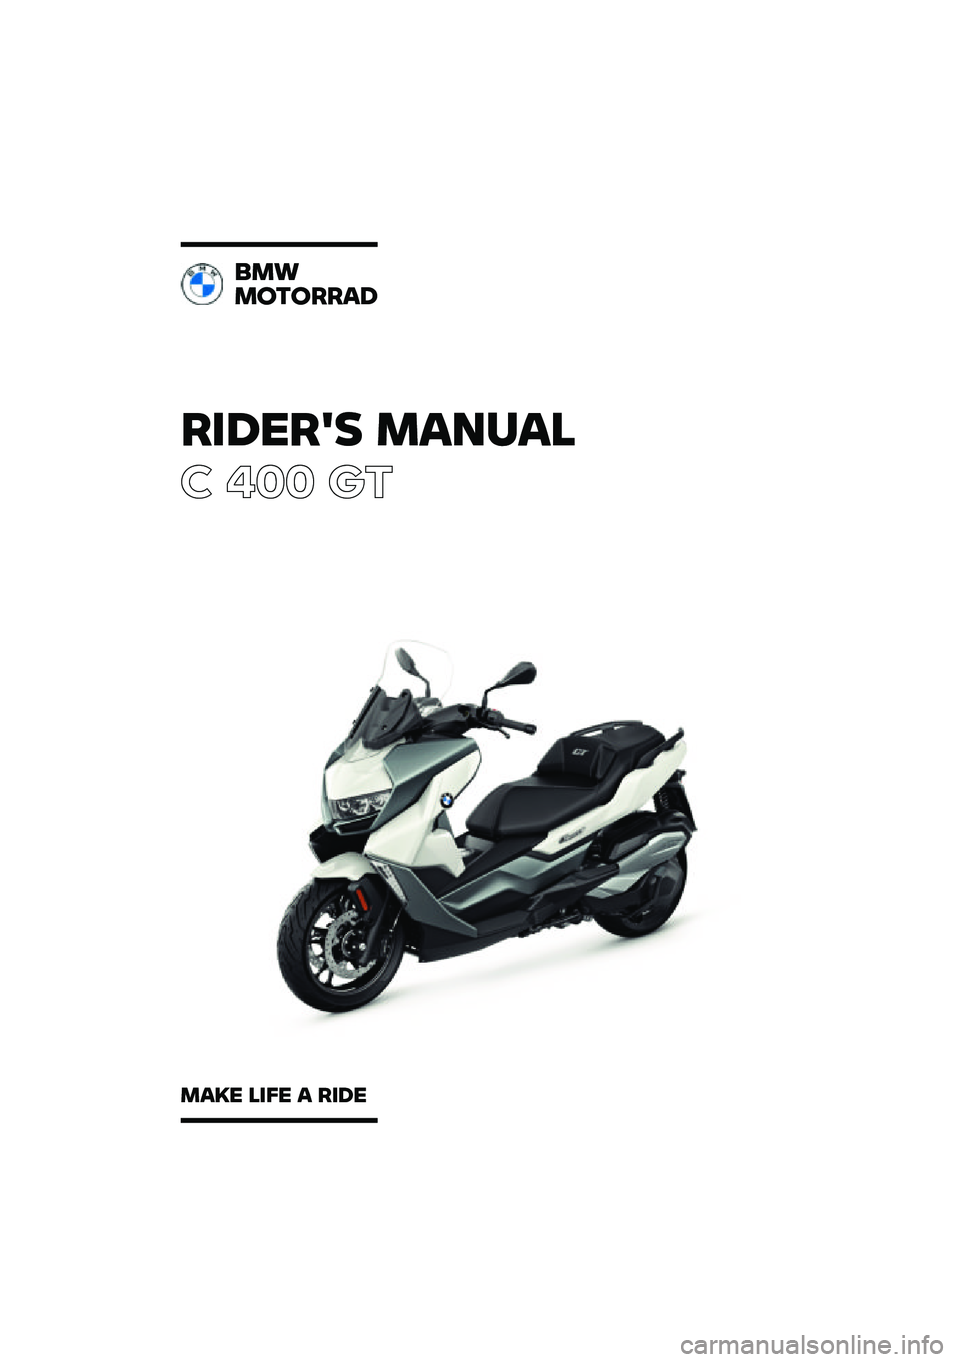 BMW MOTORRAD C 400 GT 2021  Riders Manual (in English) ������� �\b�	�
��	�\f
� ��� ��\b
�
�\b�
�\b������	�
�\b�	�� �\f��� �	 ���� 